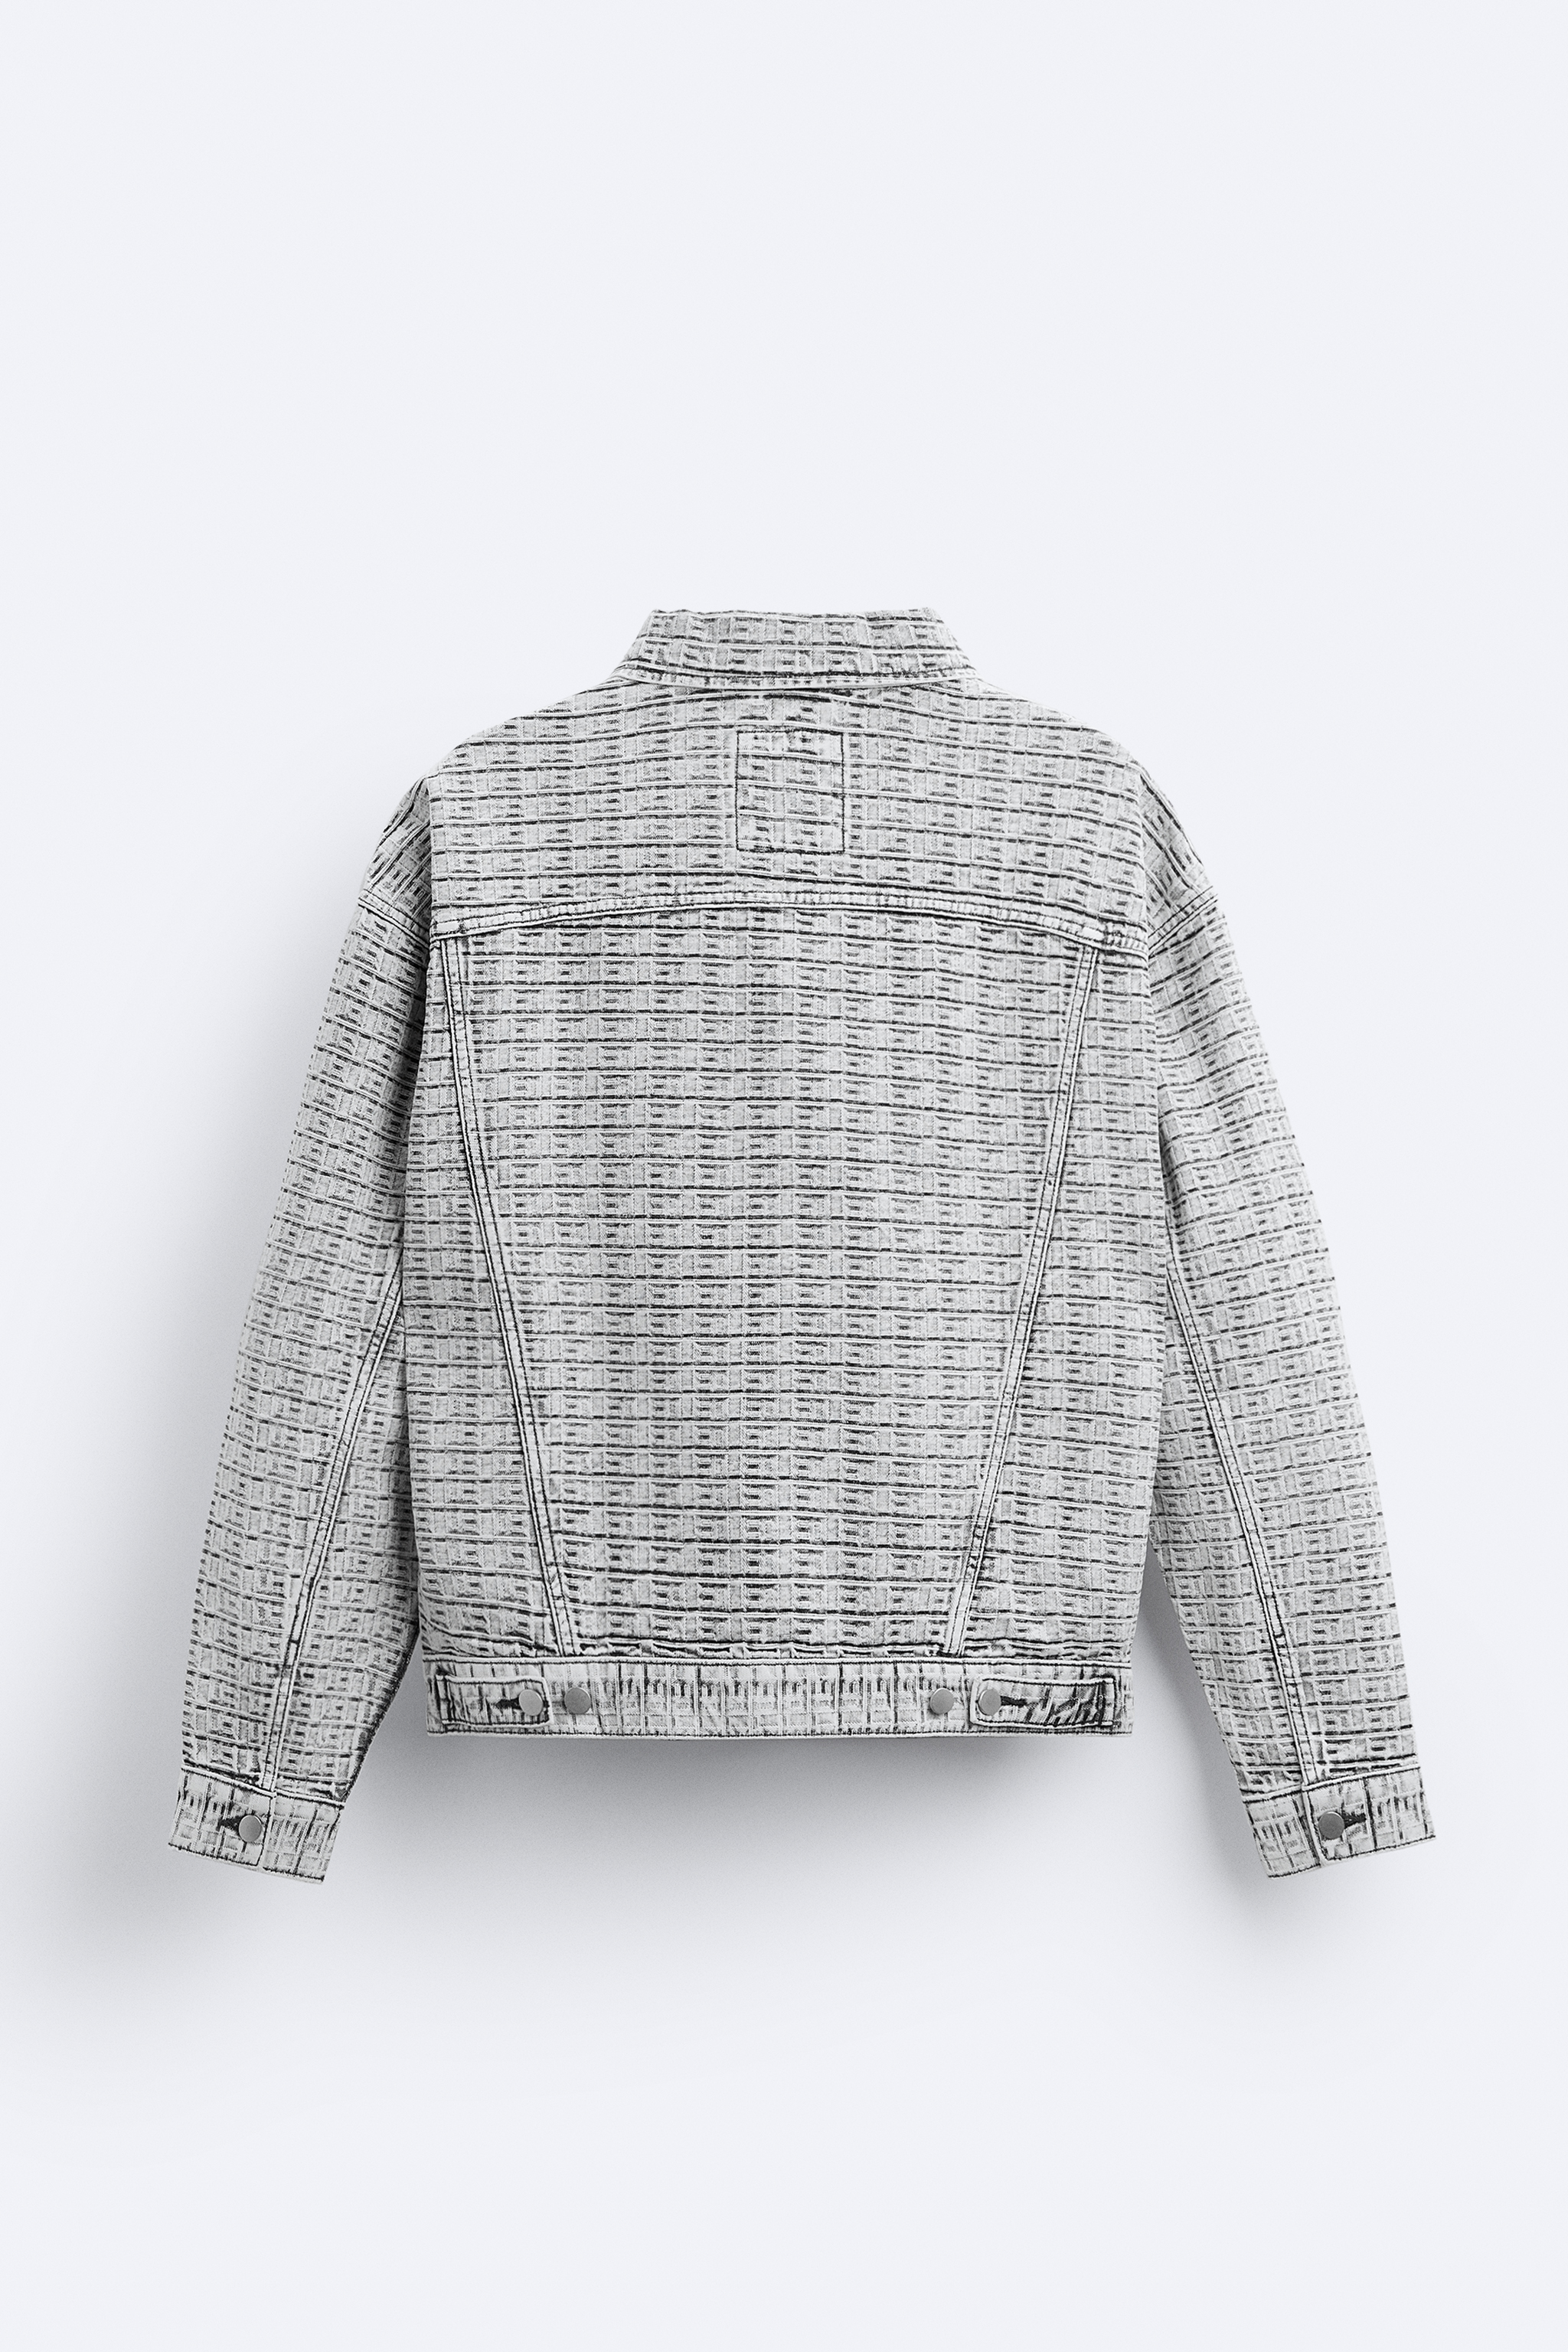 Zara - Geometric Jacquard Denim Jacket - Gray - Men